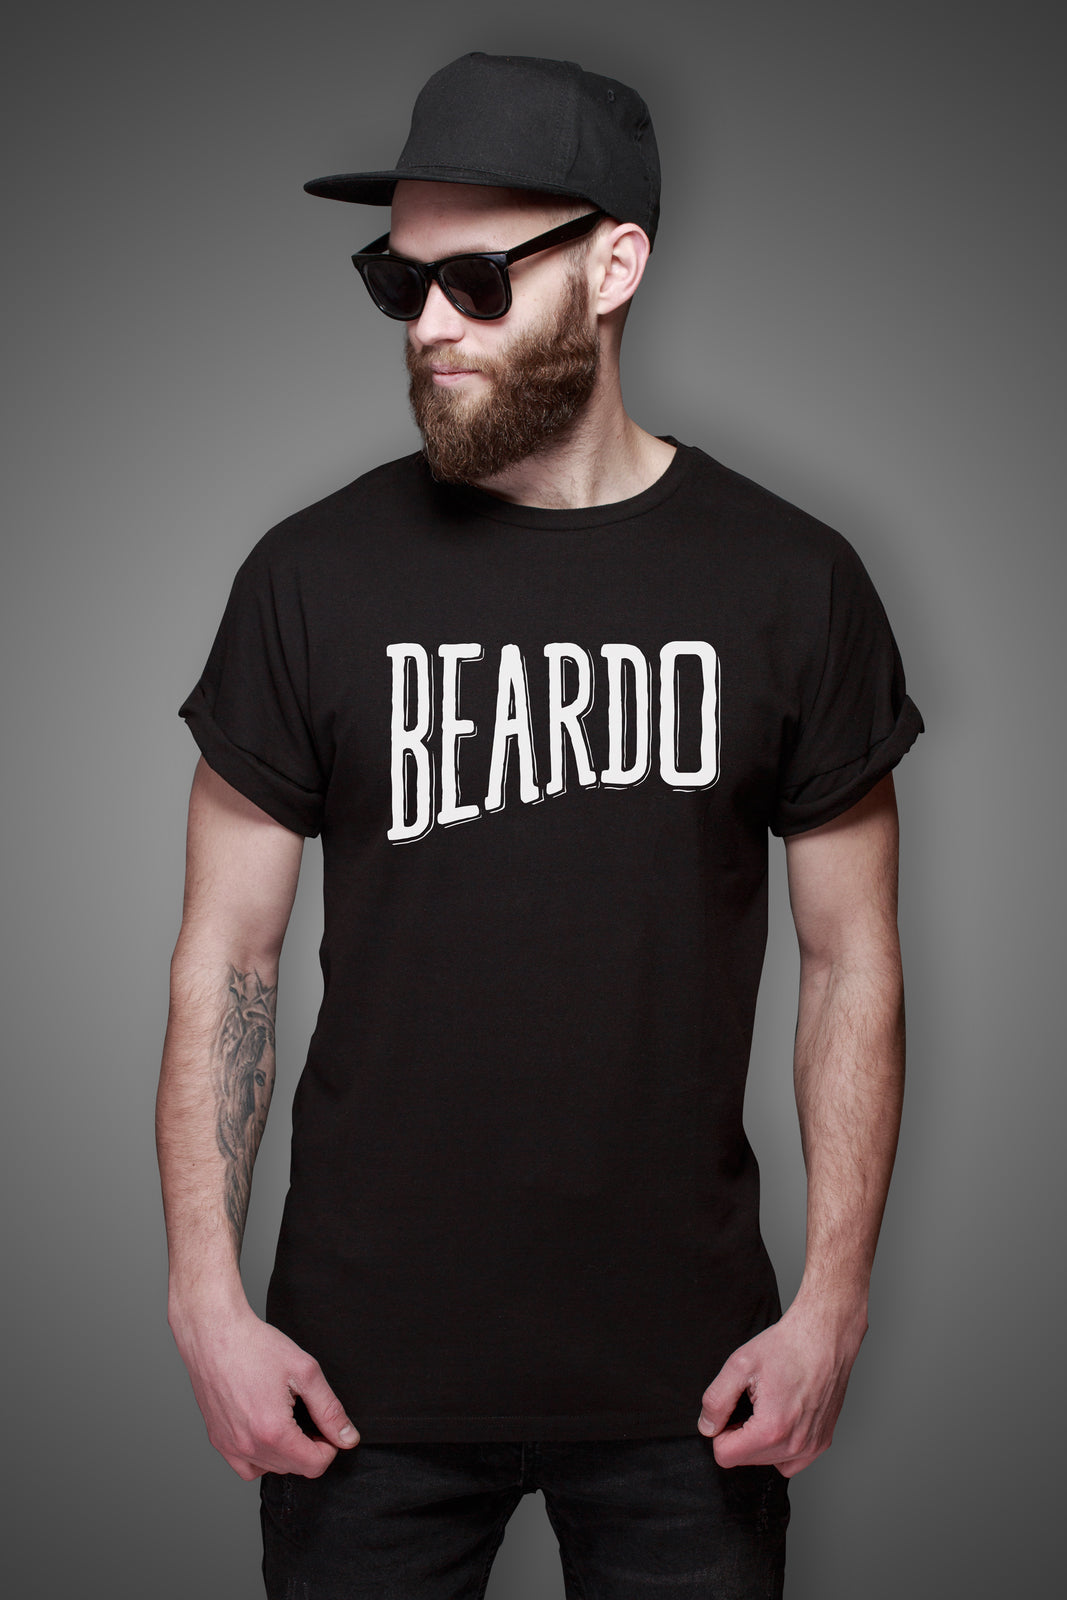 Official Beardo T-shirt